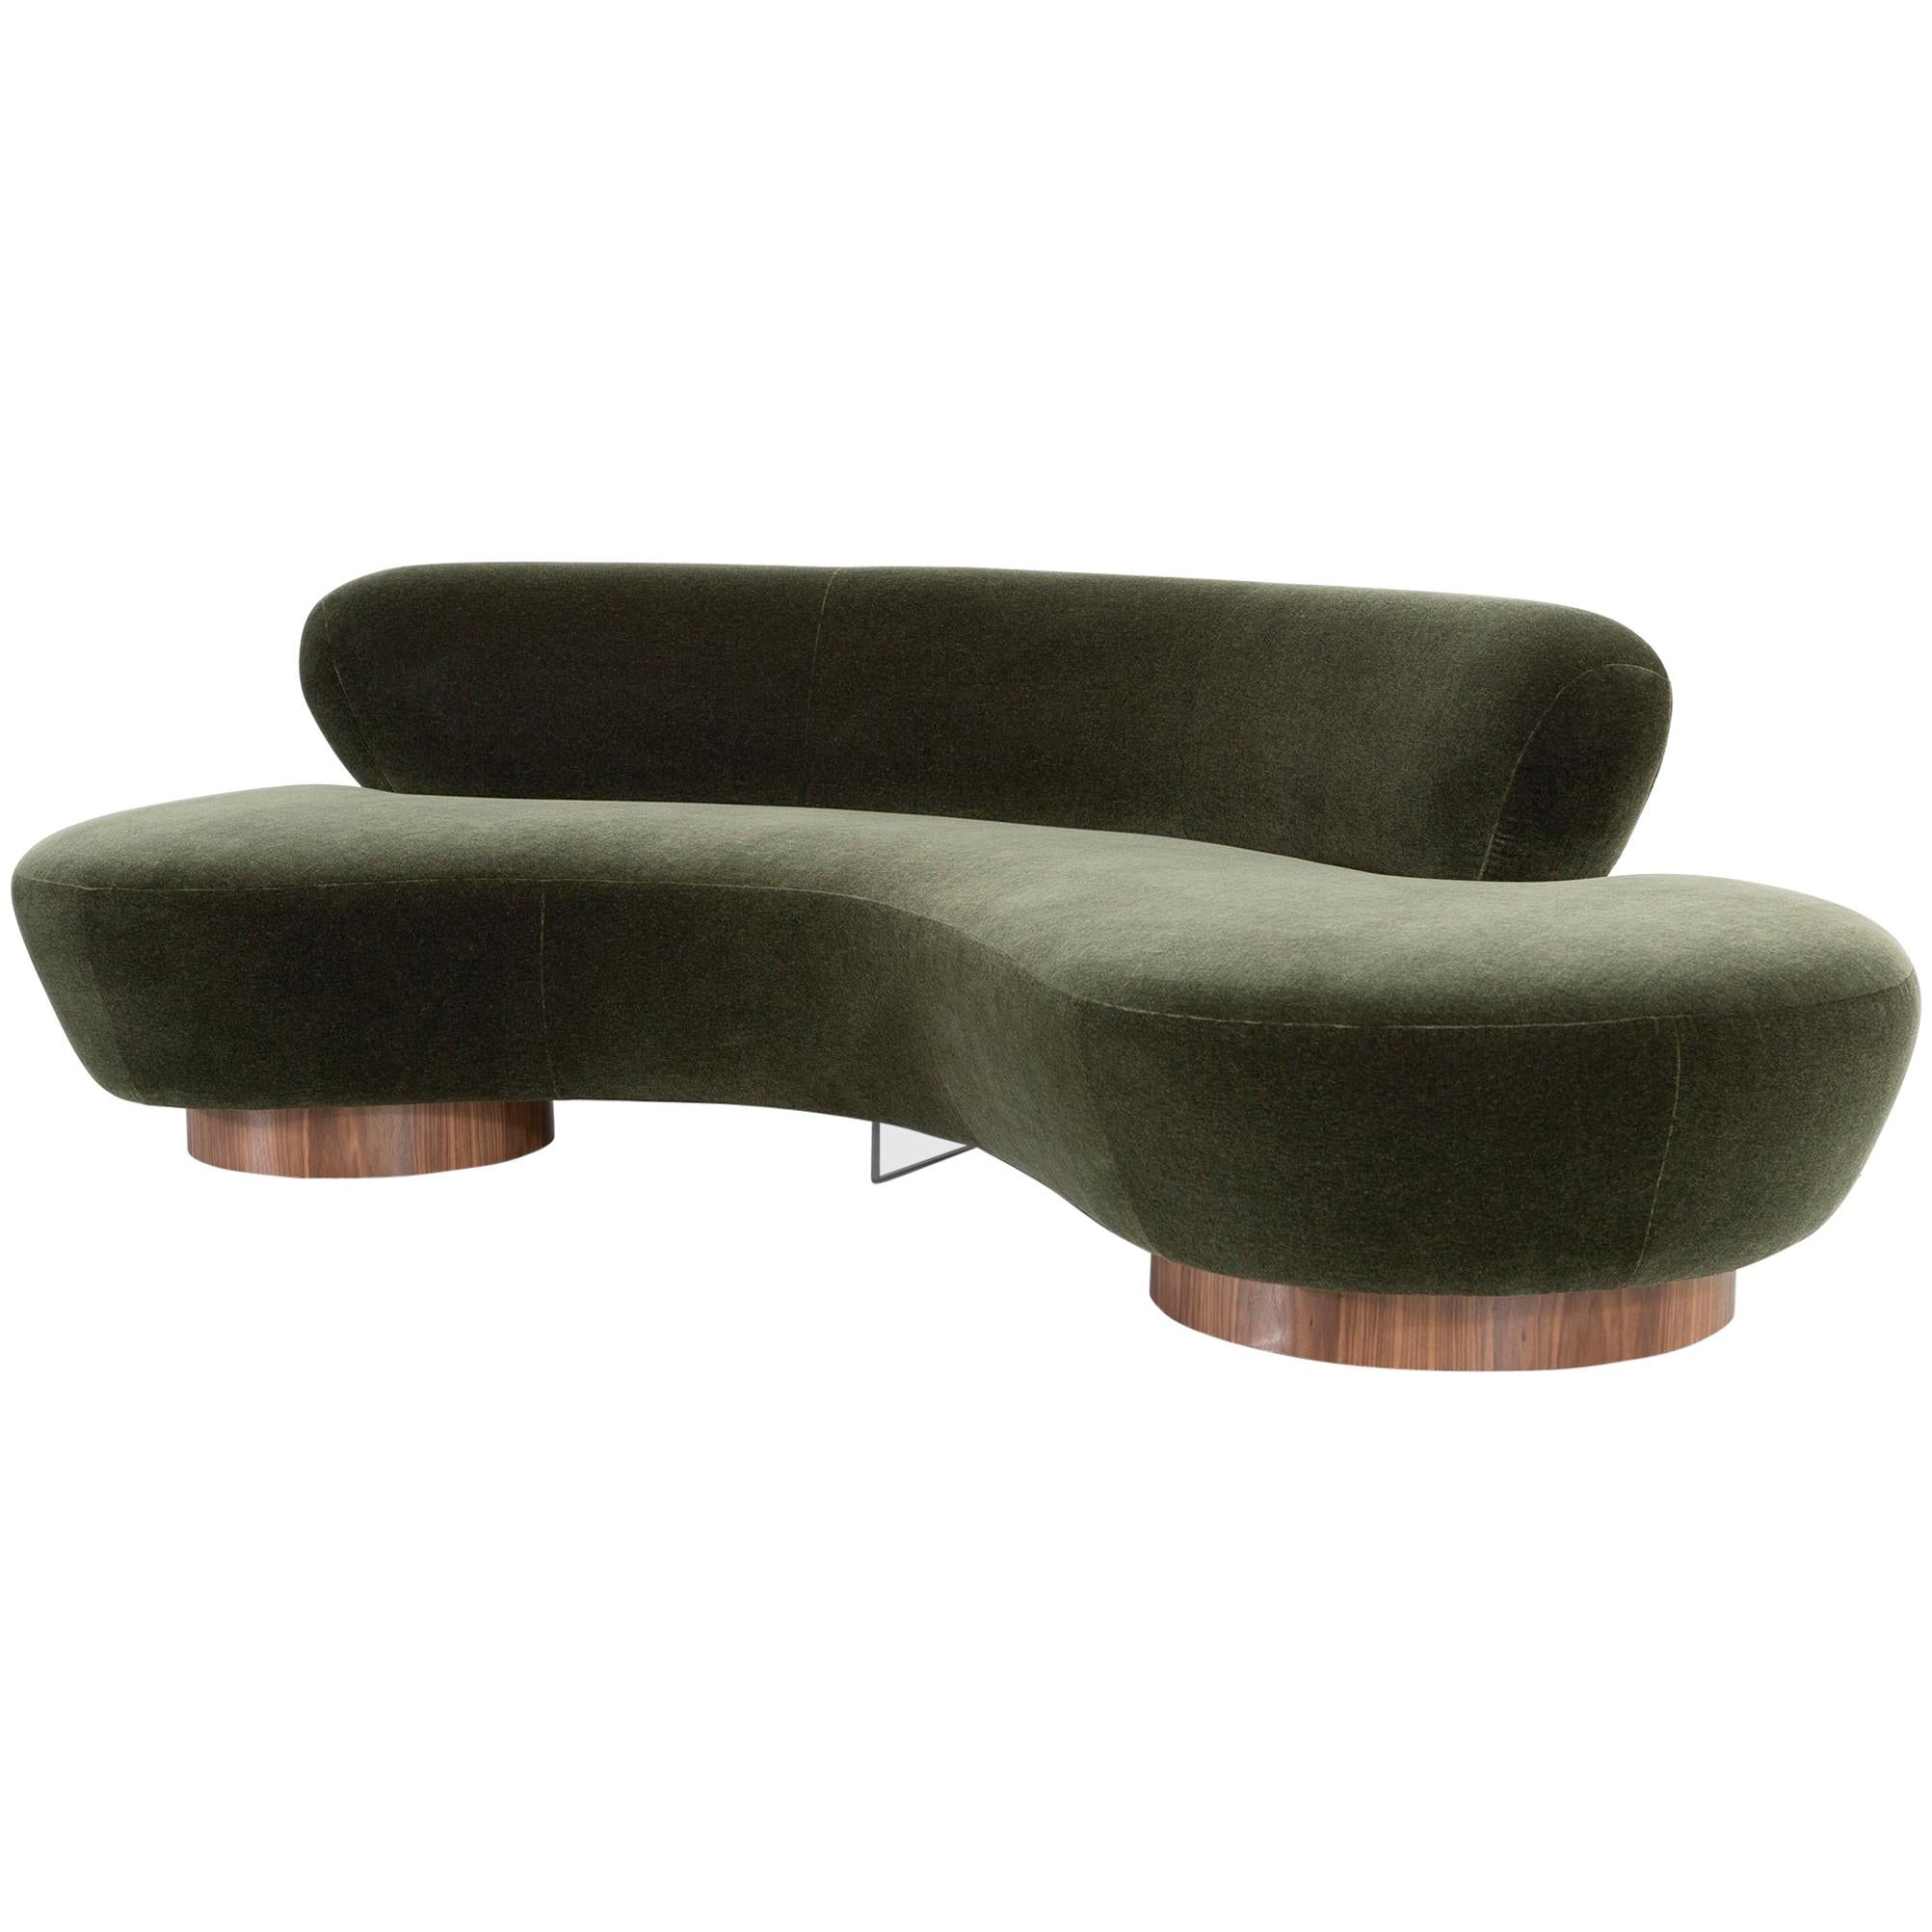 Vladimir Kagan for Directional Cloud Sofa Freshly Reupholstered in Mohair